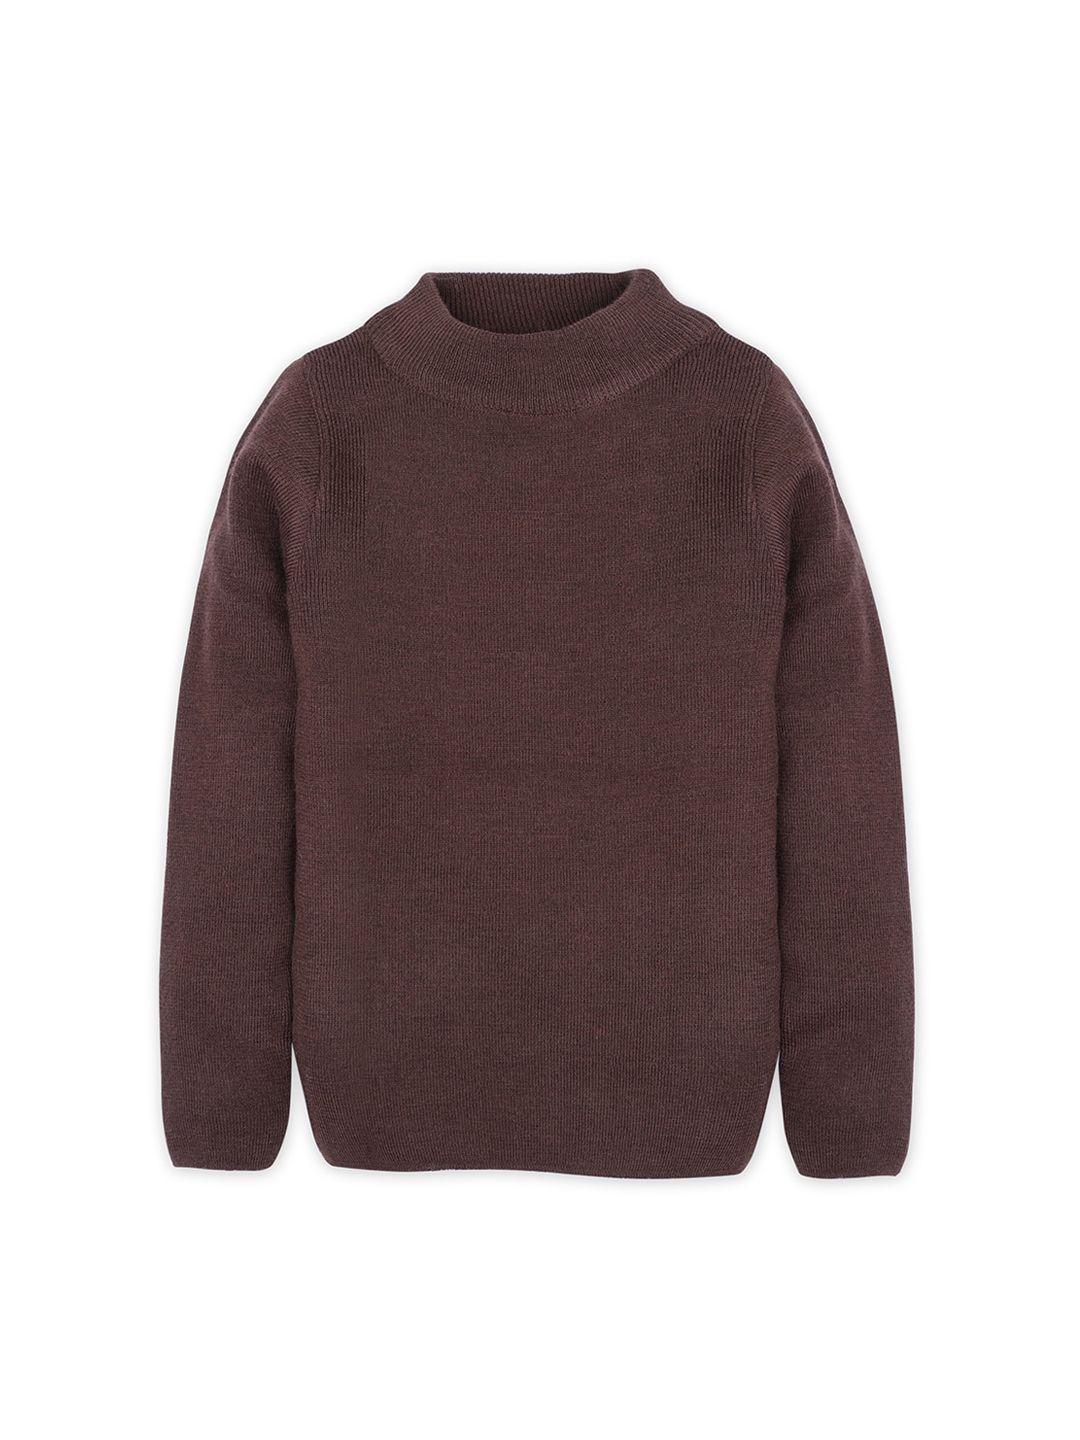 rvk unisex kids brown solid pullover sweater